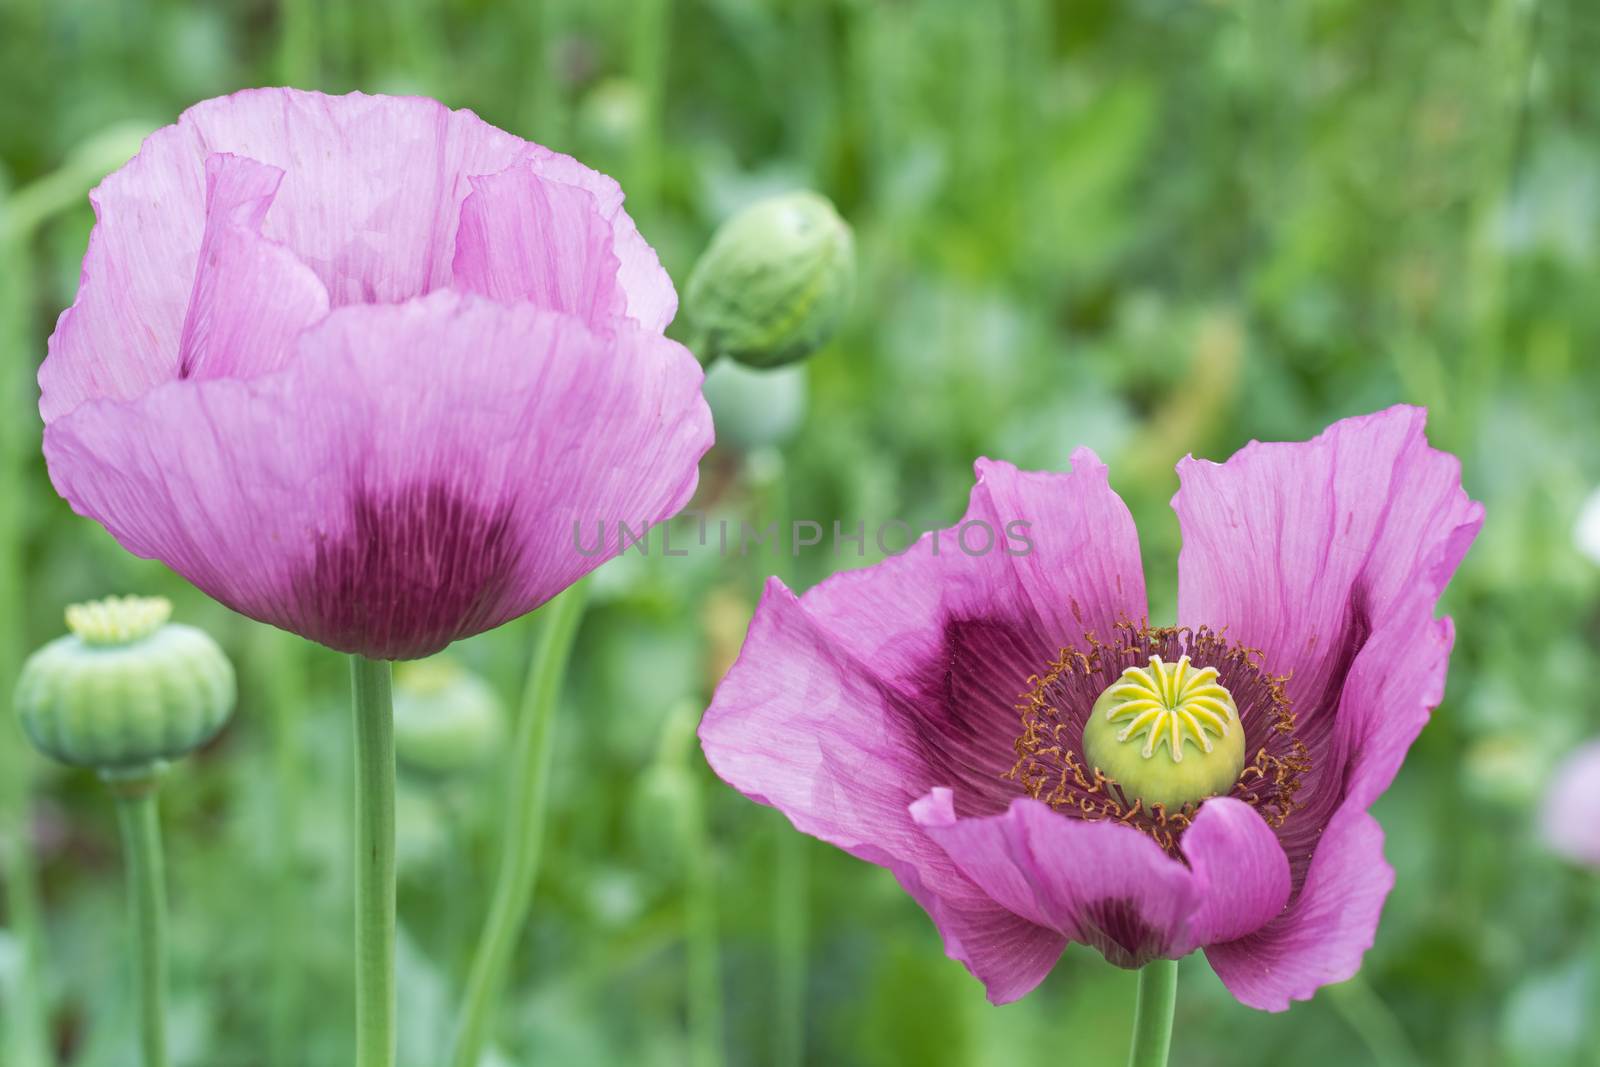 Opium Poppy Flower Closeup by milinz